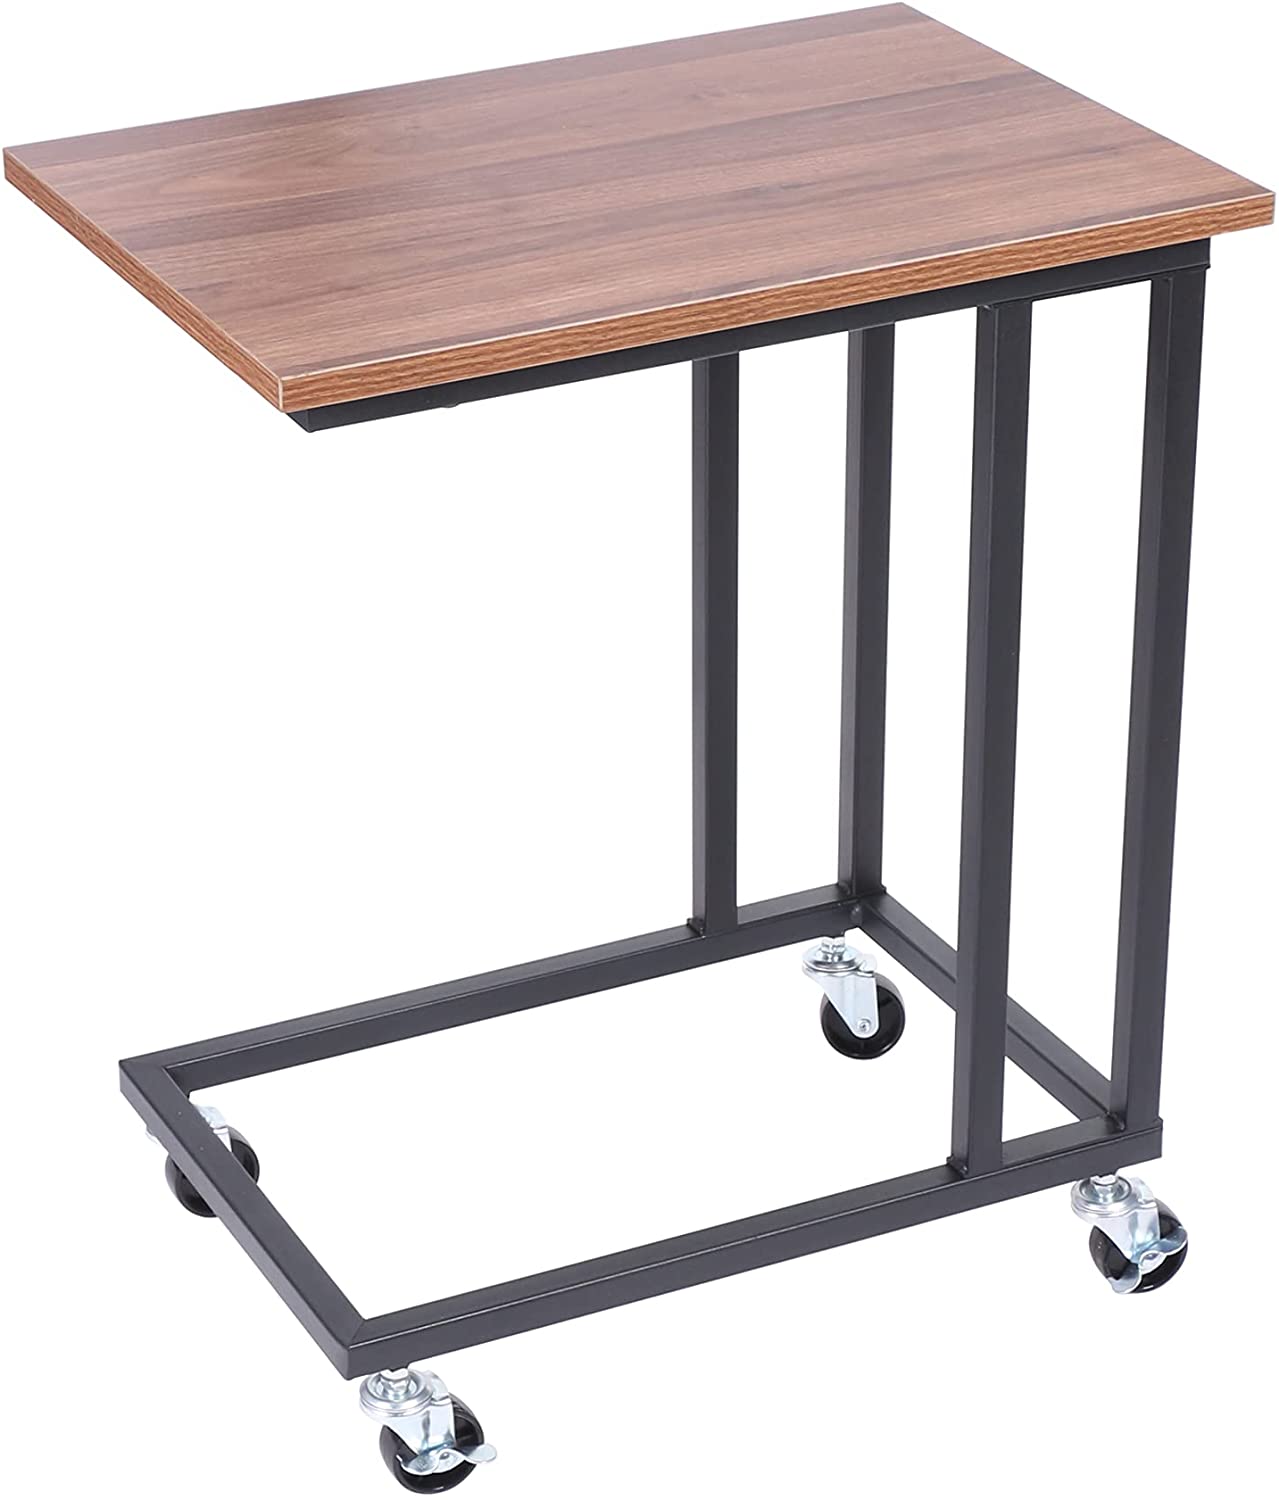 Vintage Brown C Shaped Industrial Wooden/Steel Bedside Sofa Coffee Laptop Rolling End Table Desk